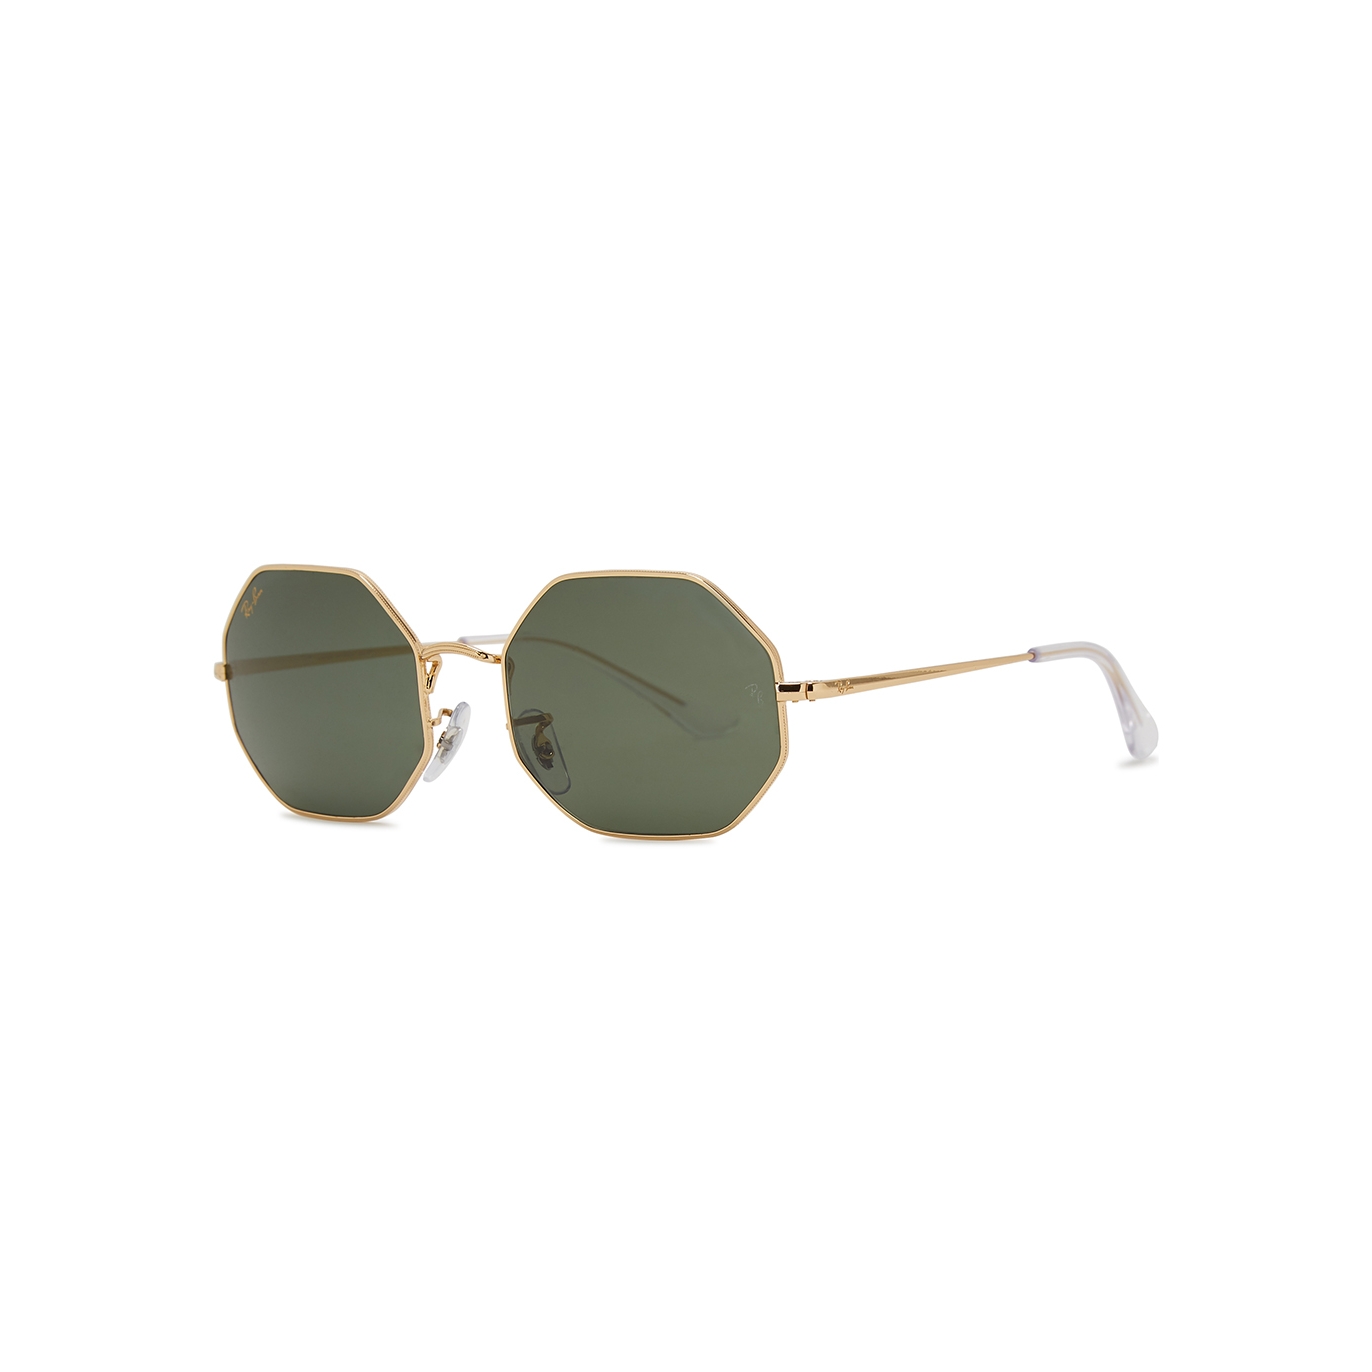 Ray-Ban 1972 Legend Gold-tone Octagon-frame, Sunglasses, Green Lenses